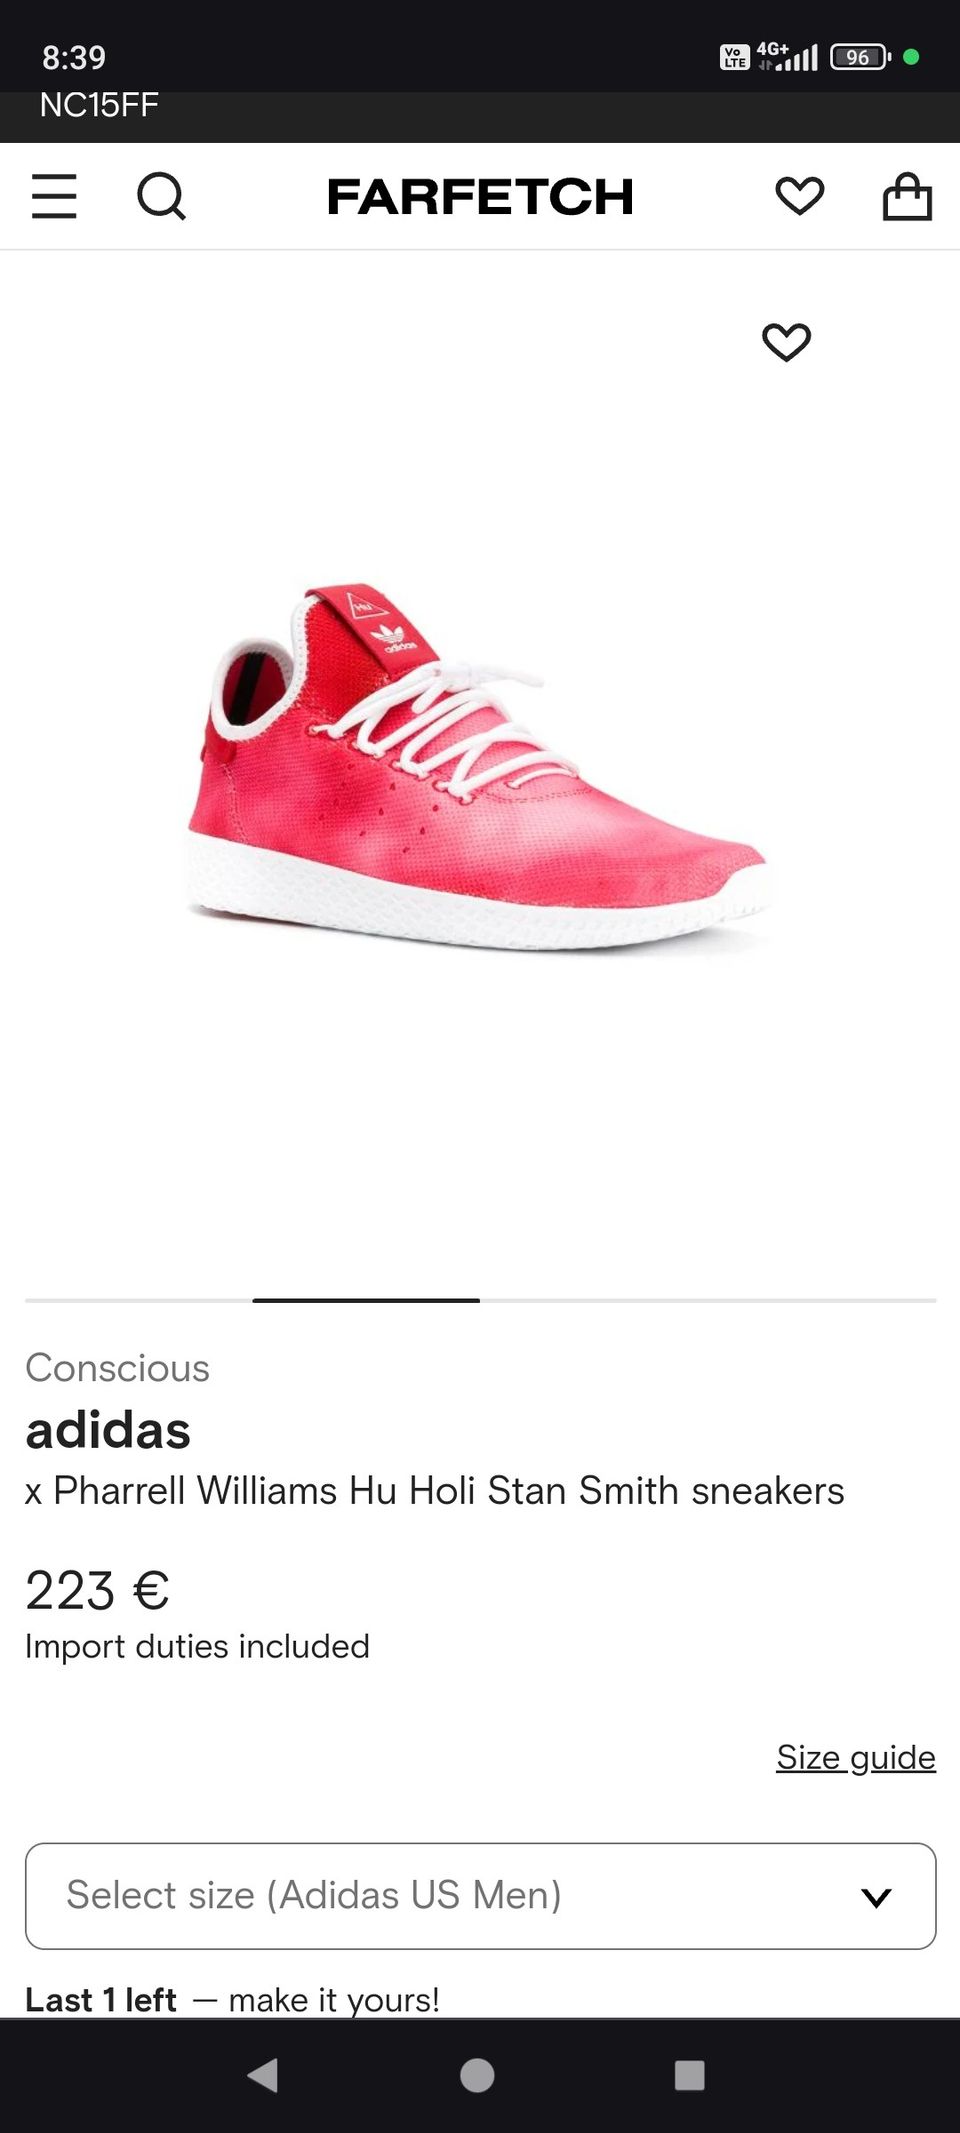 adidas x Pharrell Williams Hu Holi Stan Smith